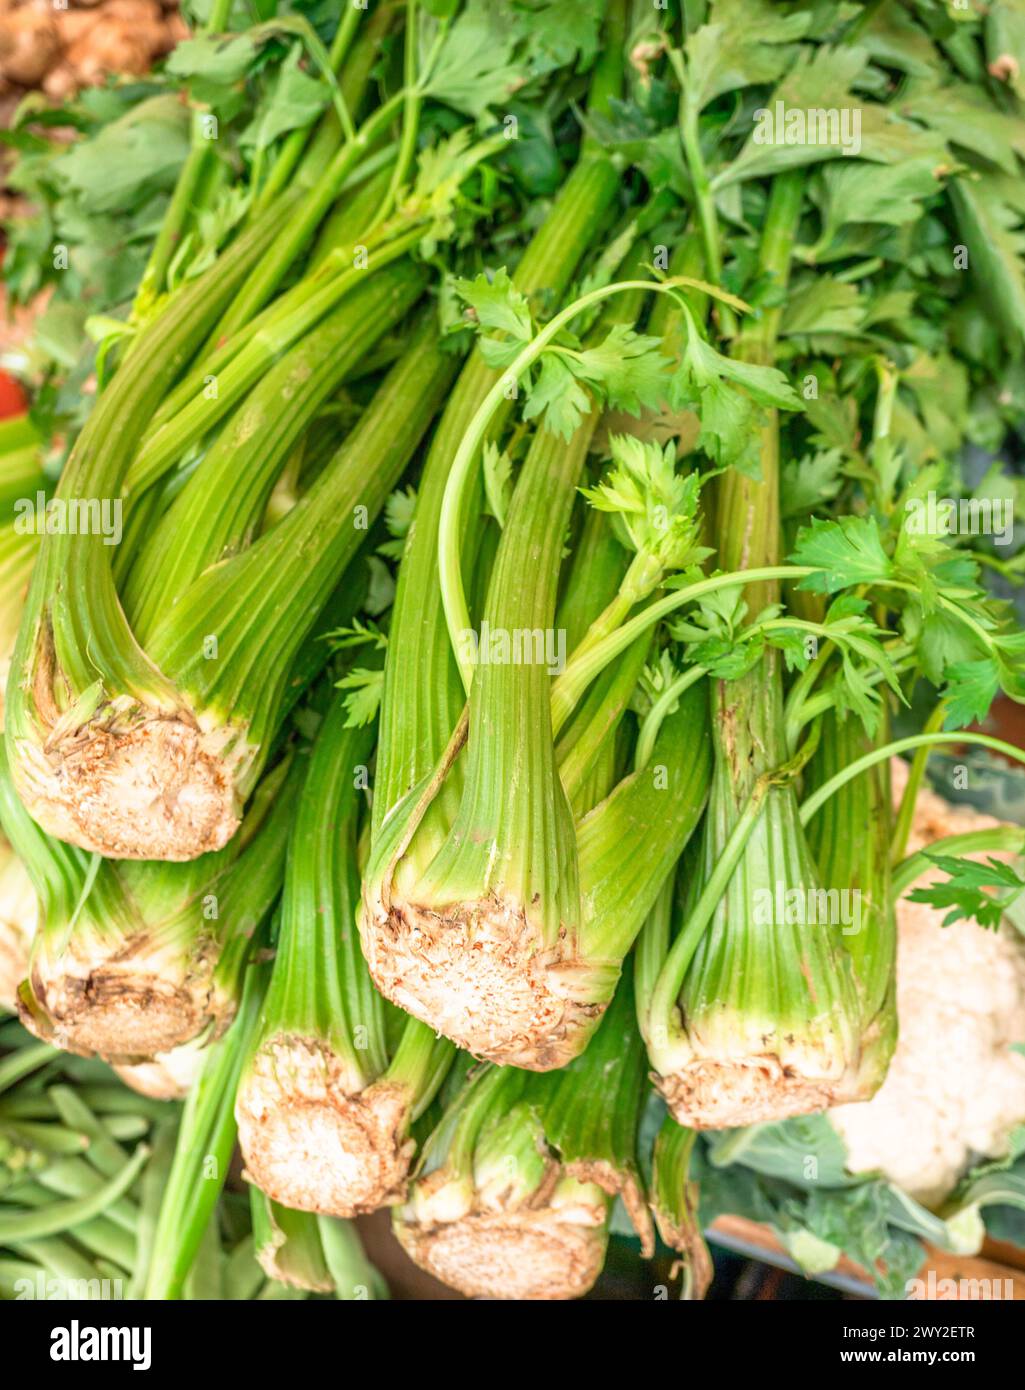 Green fresh celery stalks on the farm market stall. Close up. Stock Photo